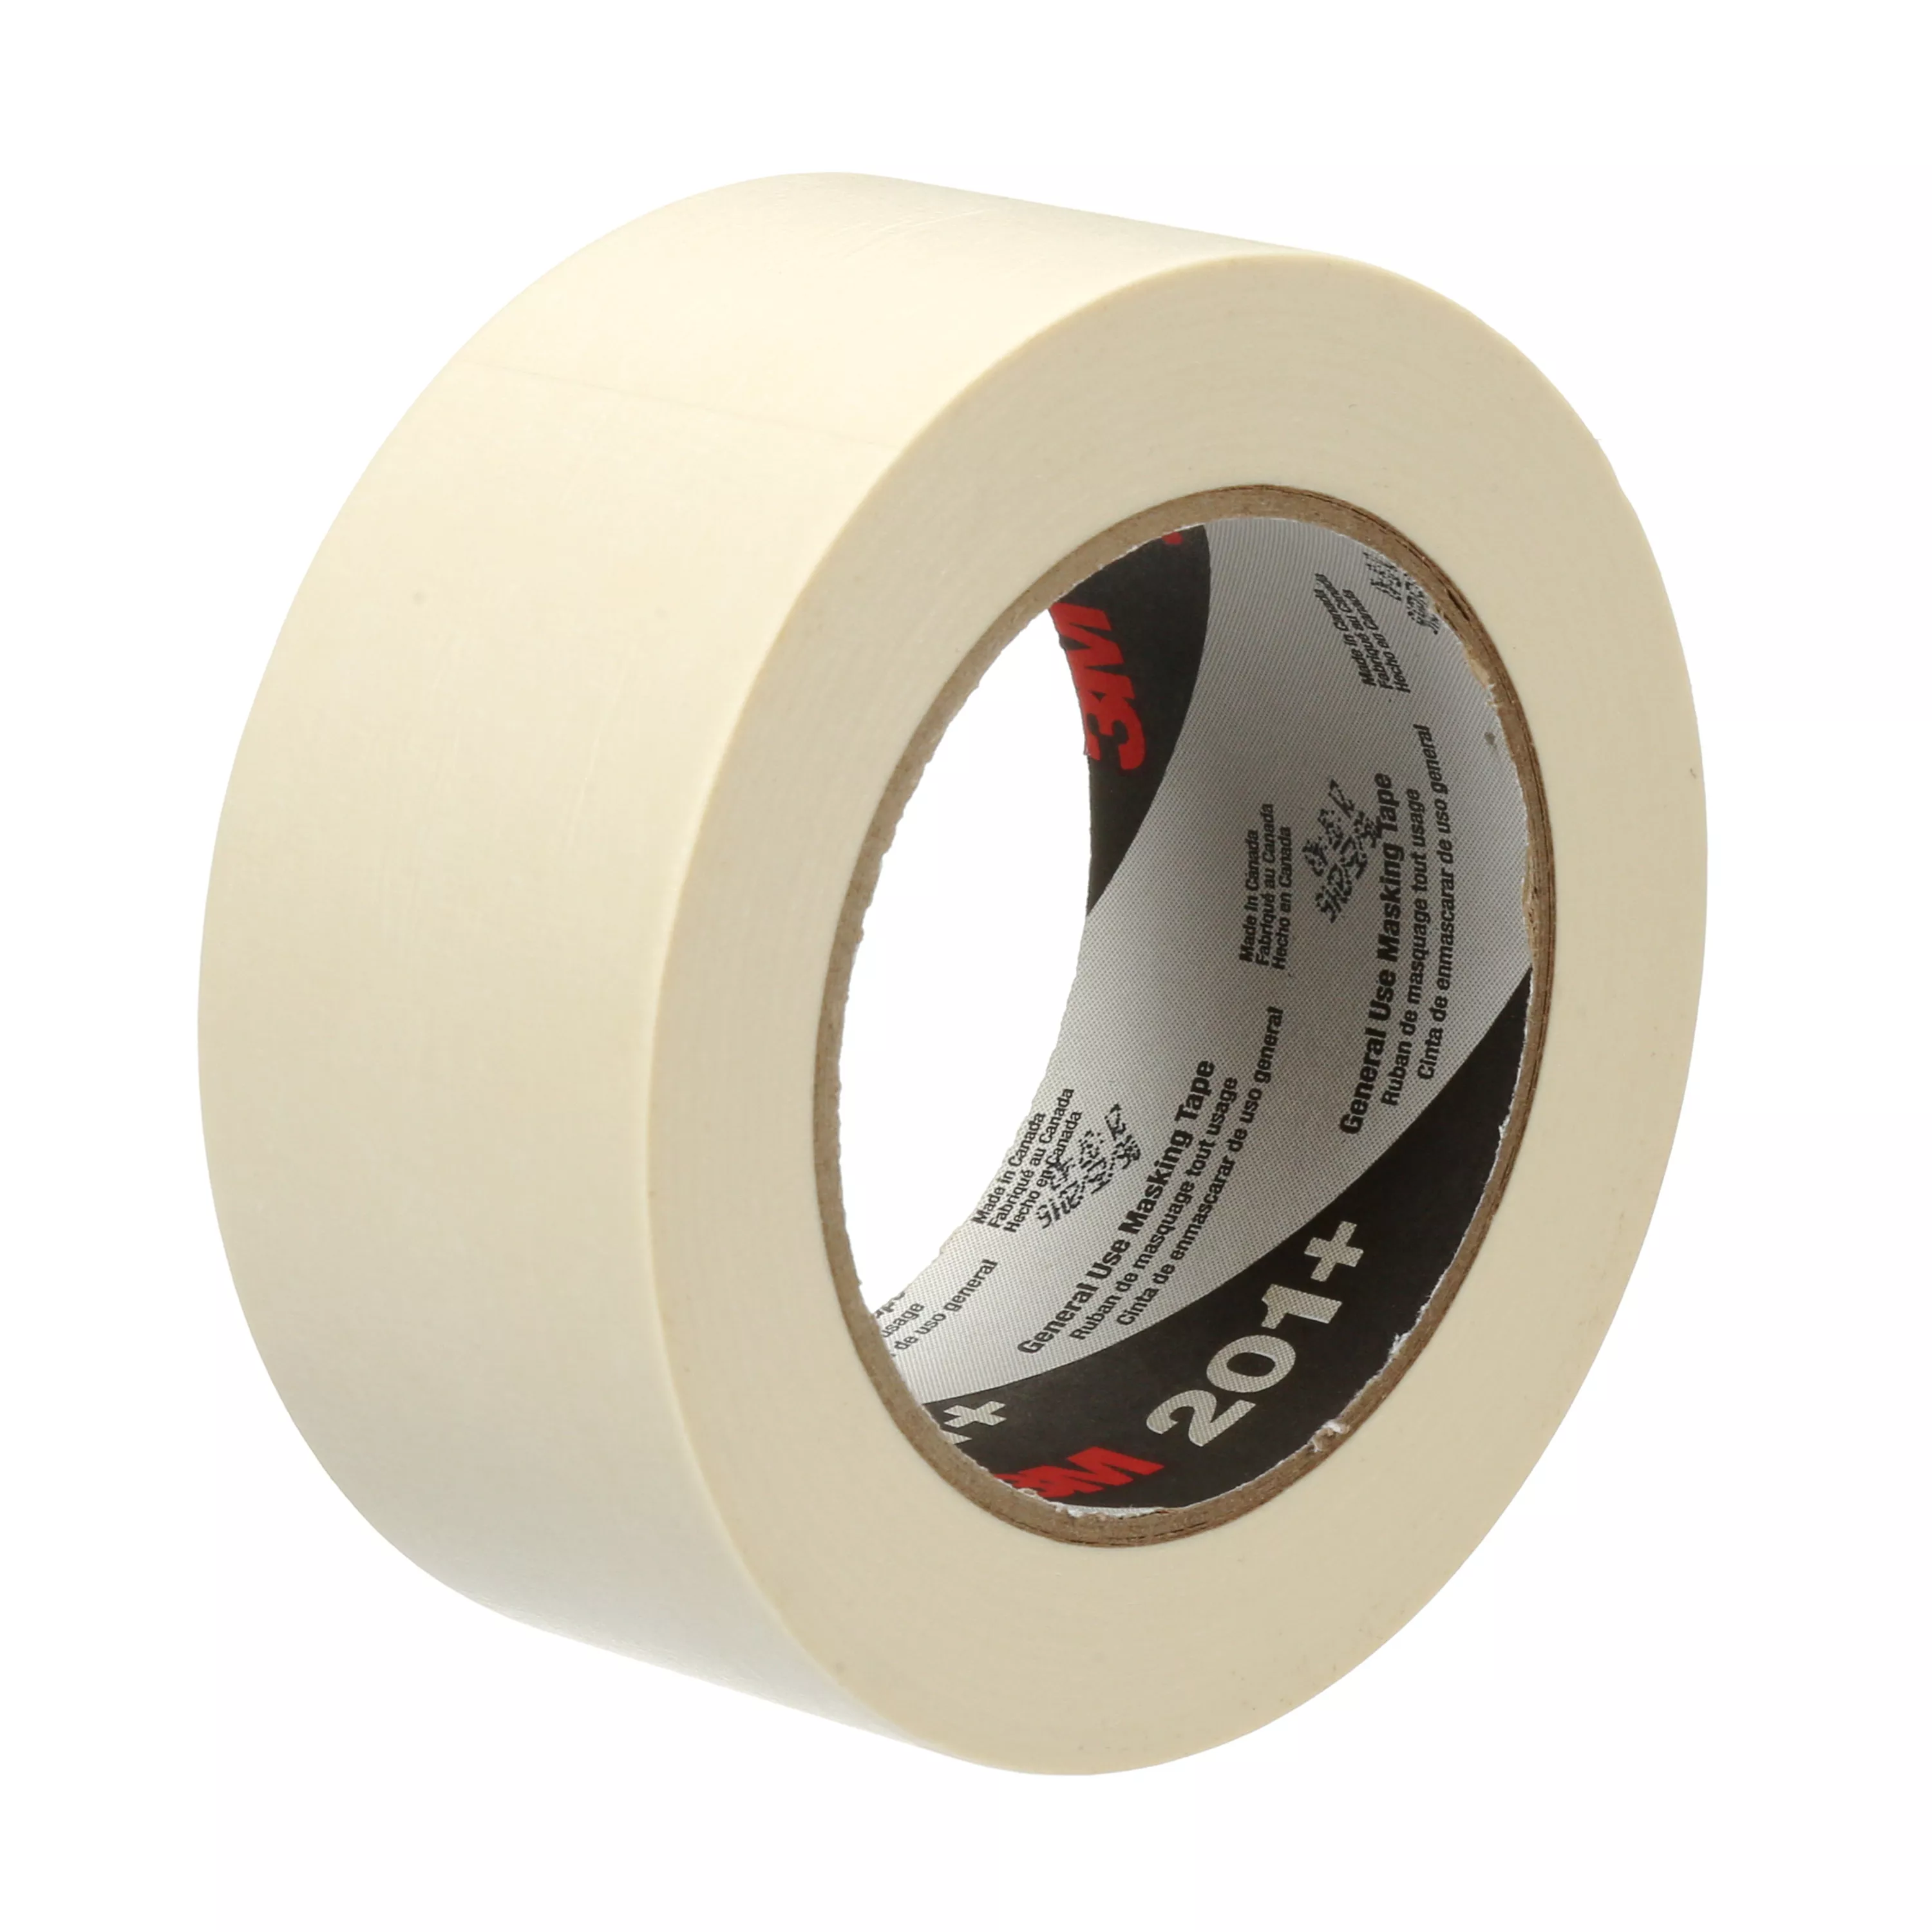 3M™ General Use Masking Tape 201+, Tan, 48 mm x 55 m, 4.4 mil, 24
Roll/Case